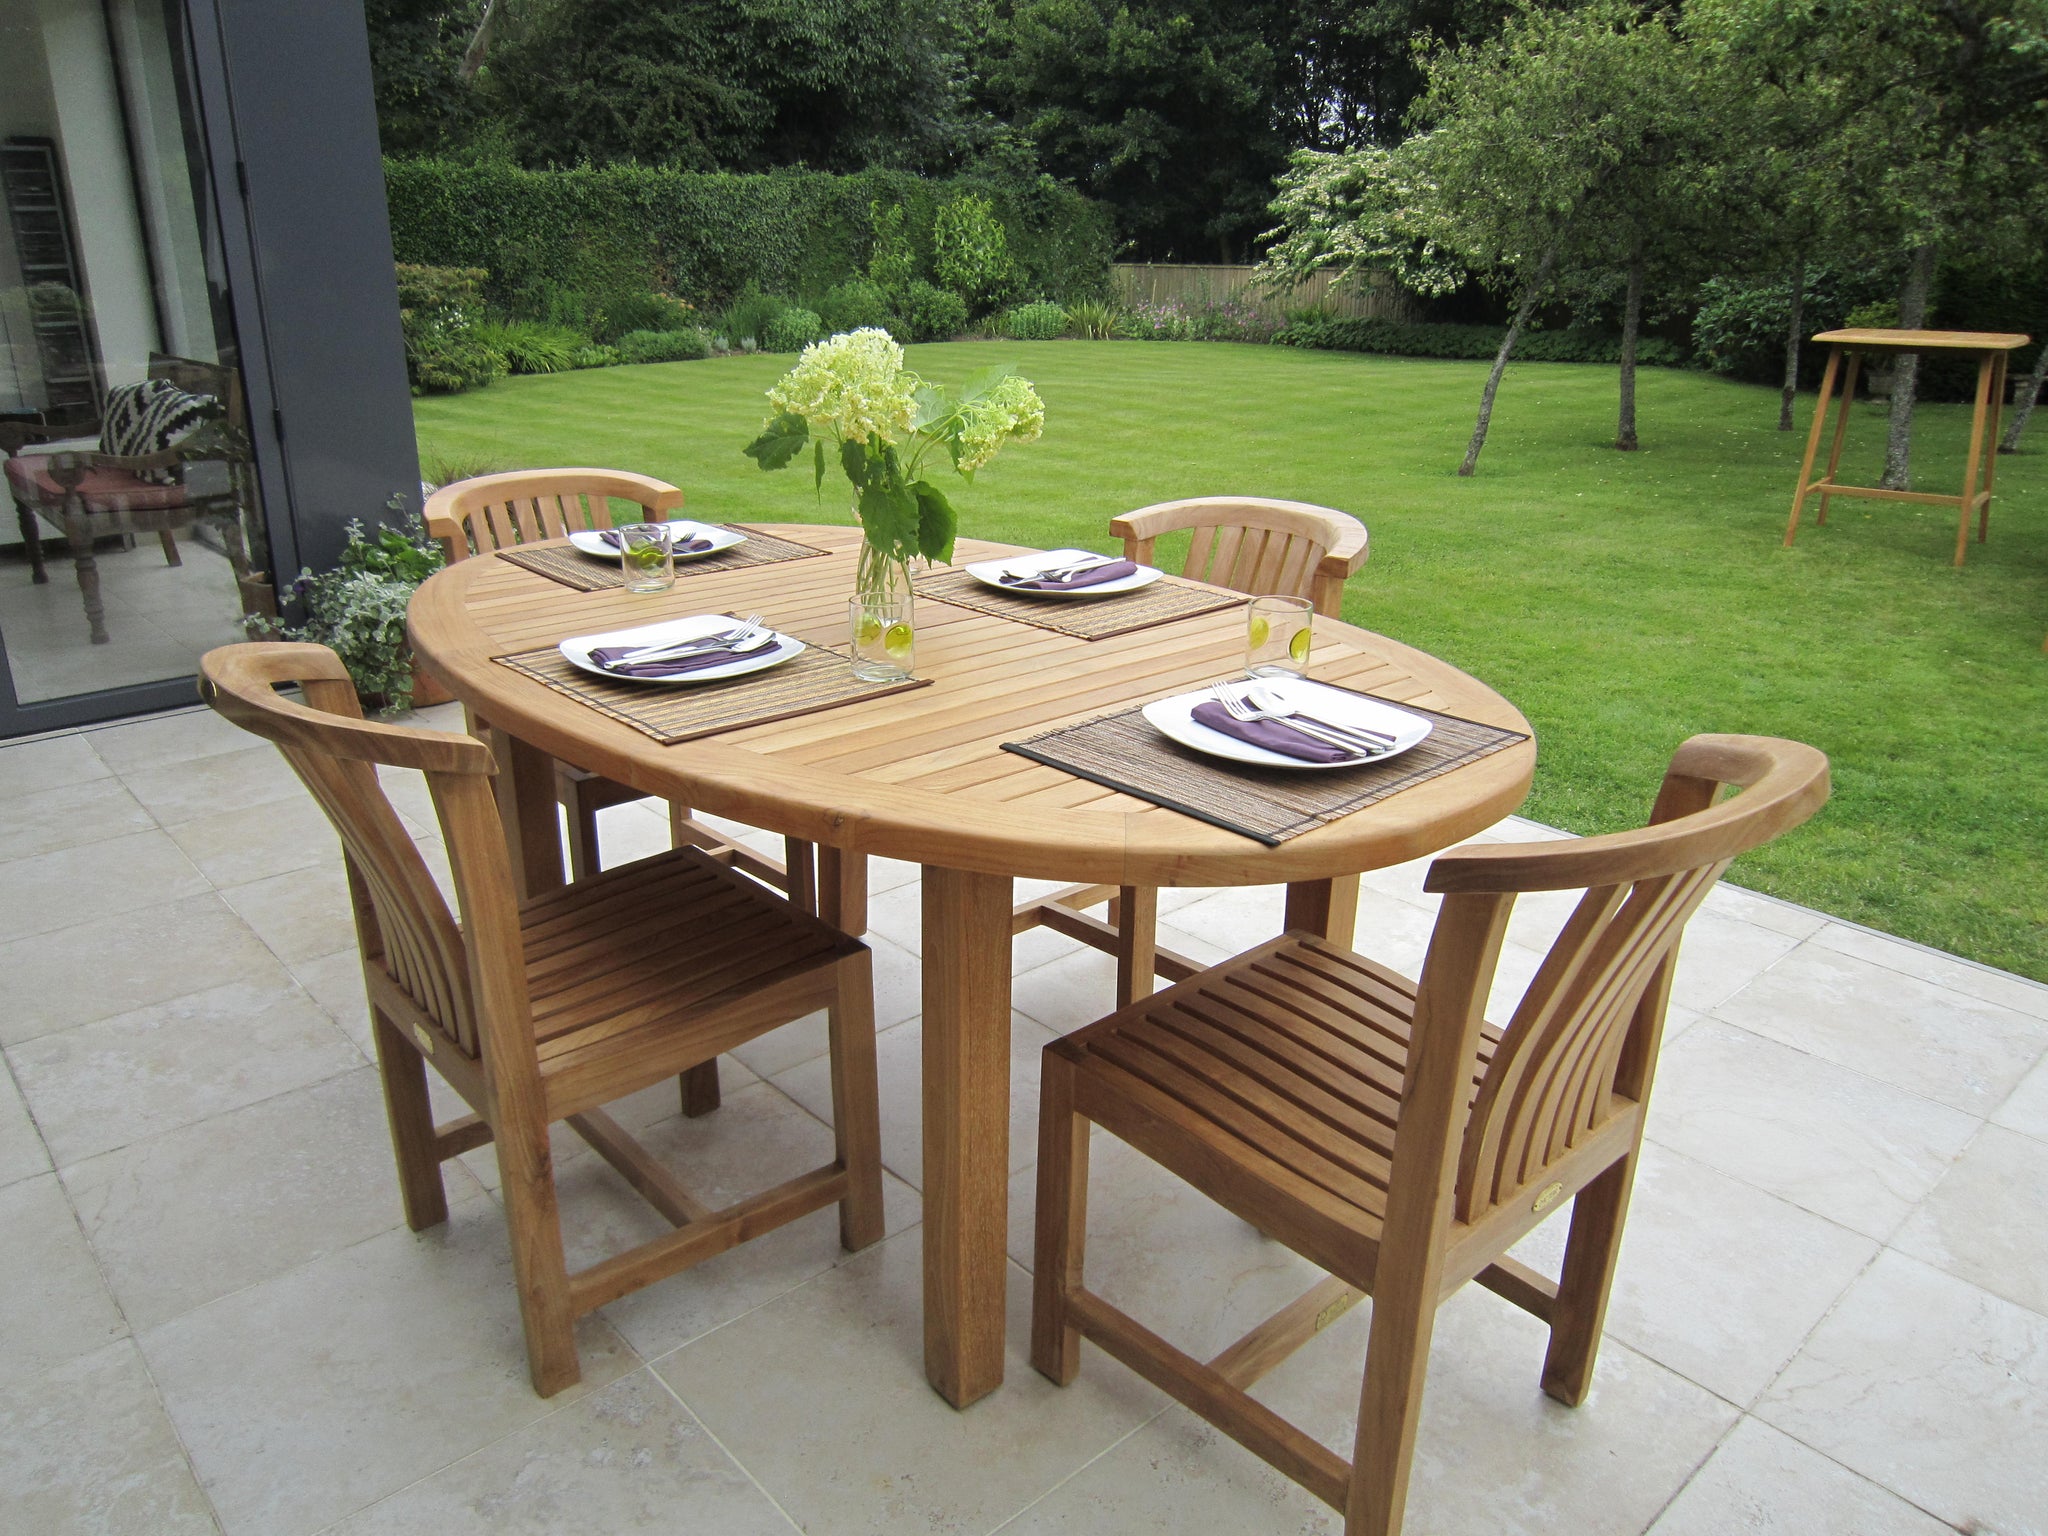 Teak oval garden dining table & chair set